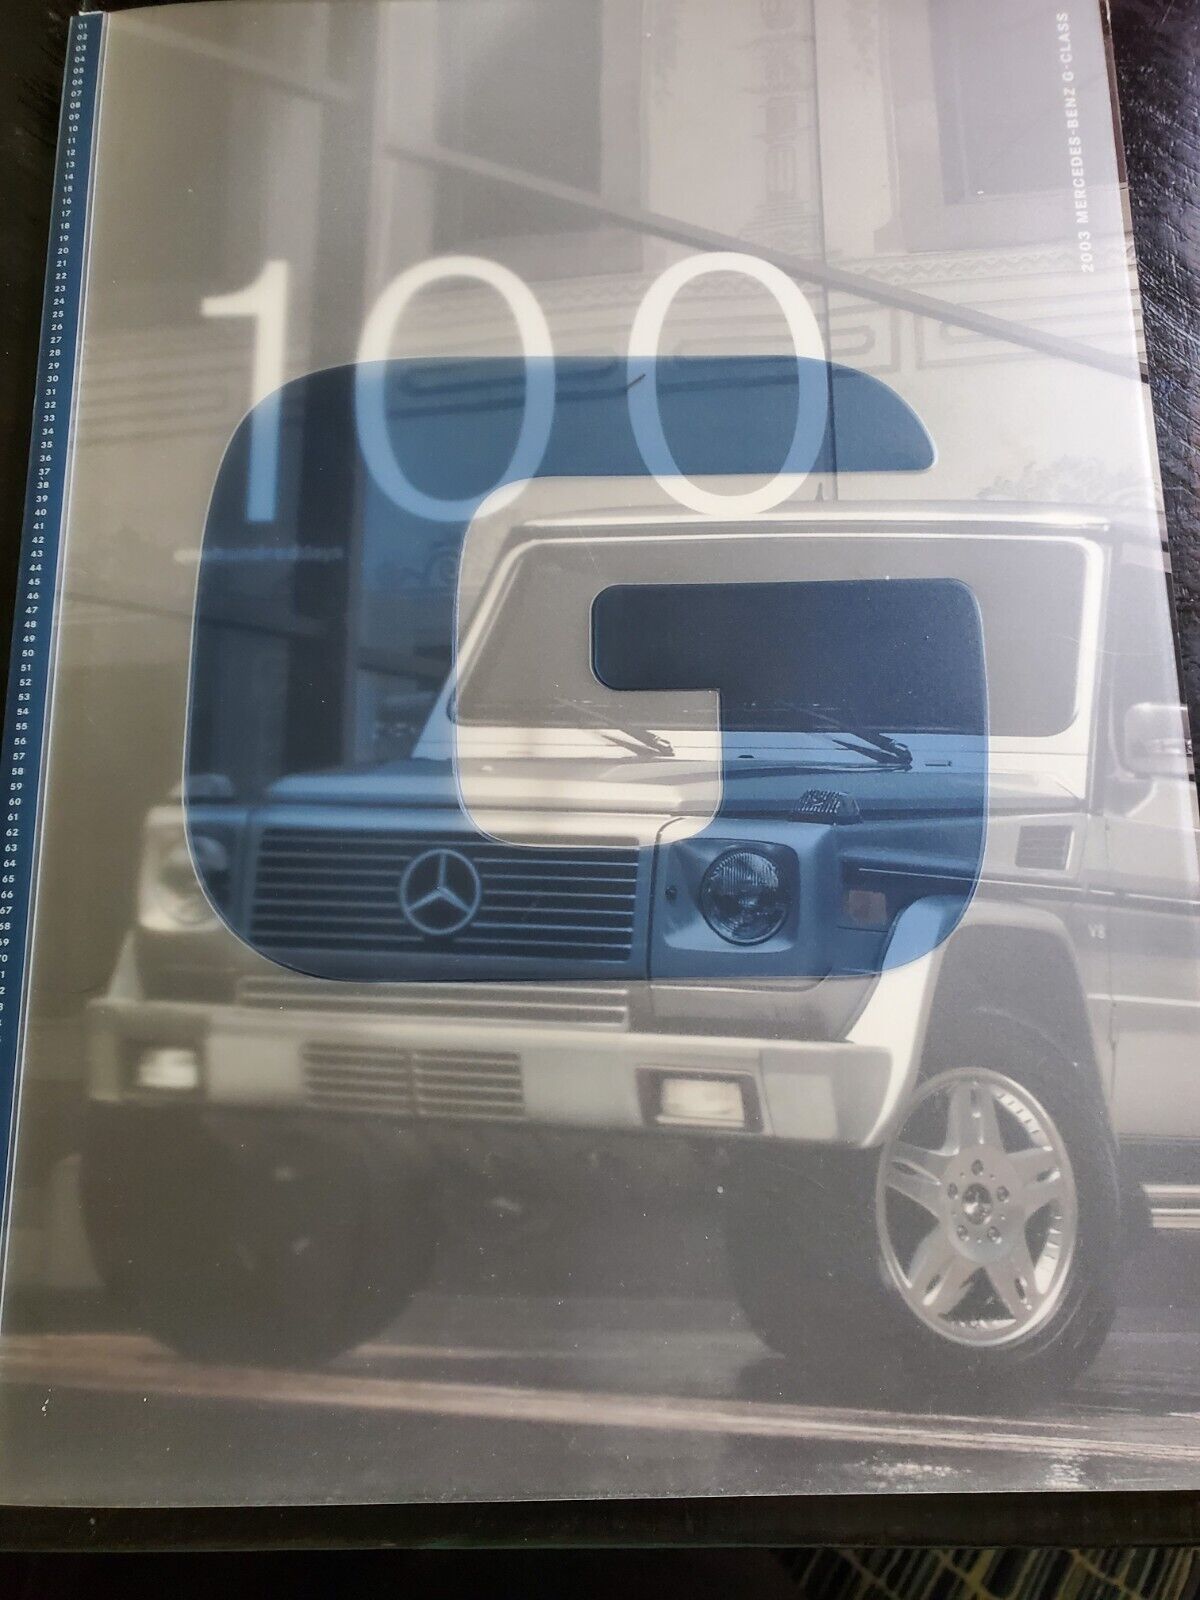 ORIGINAL Vintage 2003 Mercedes G Class Sales Brochure Book